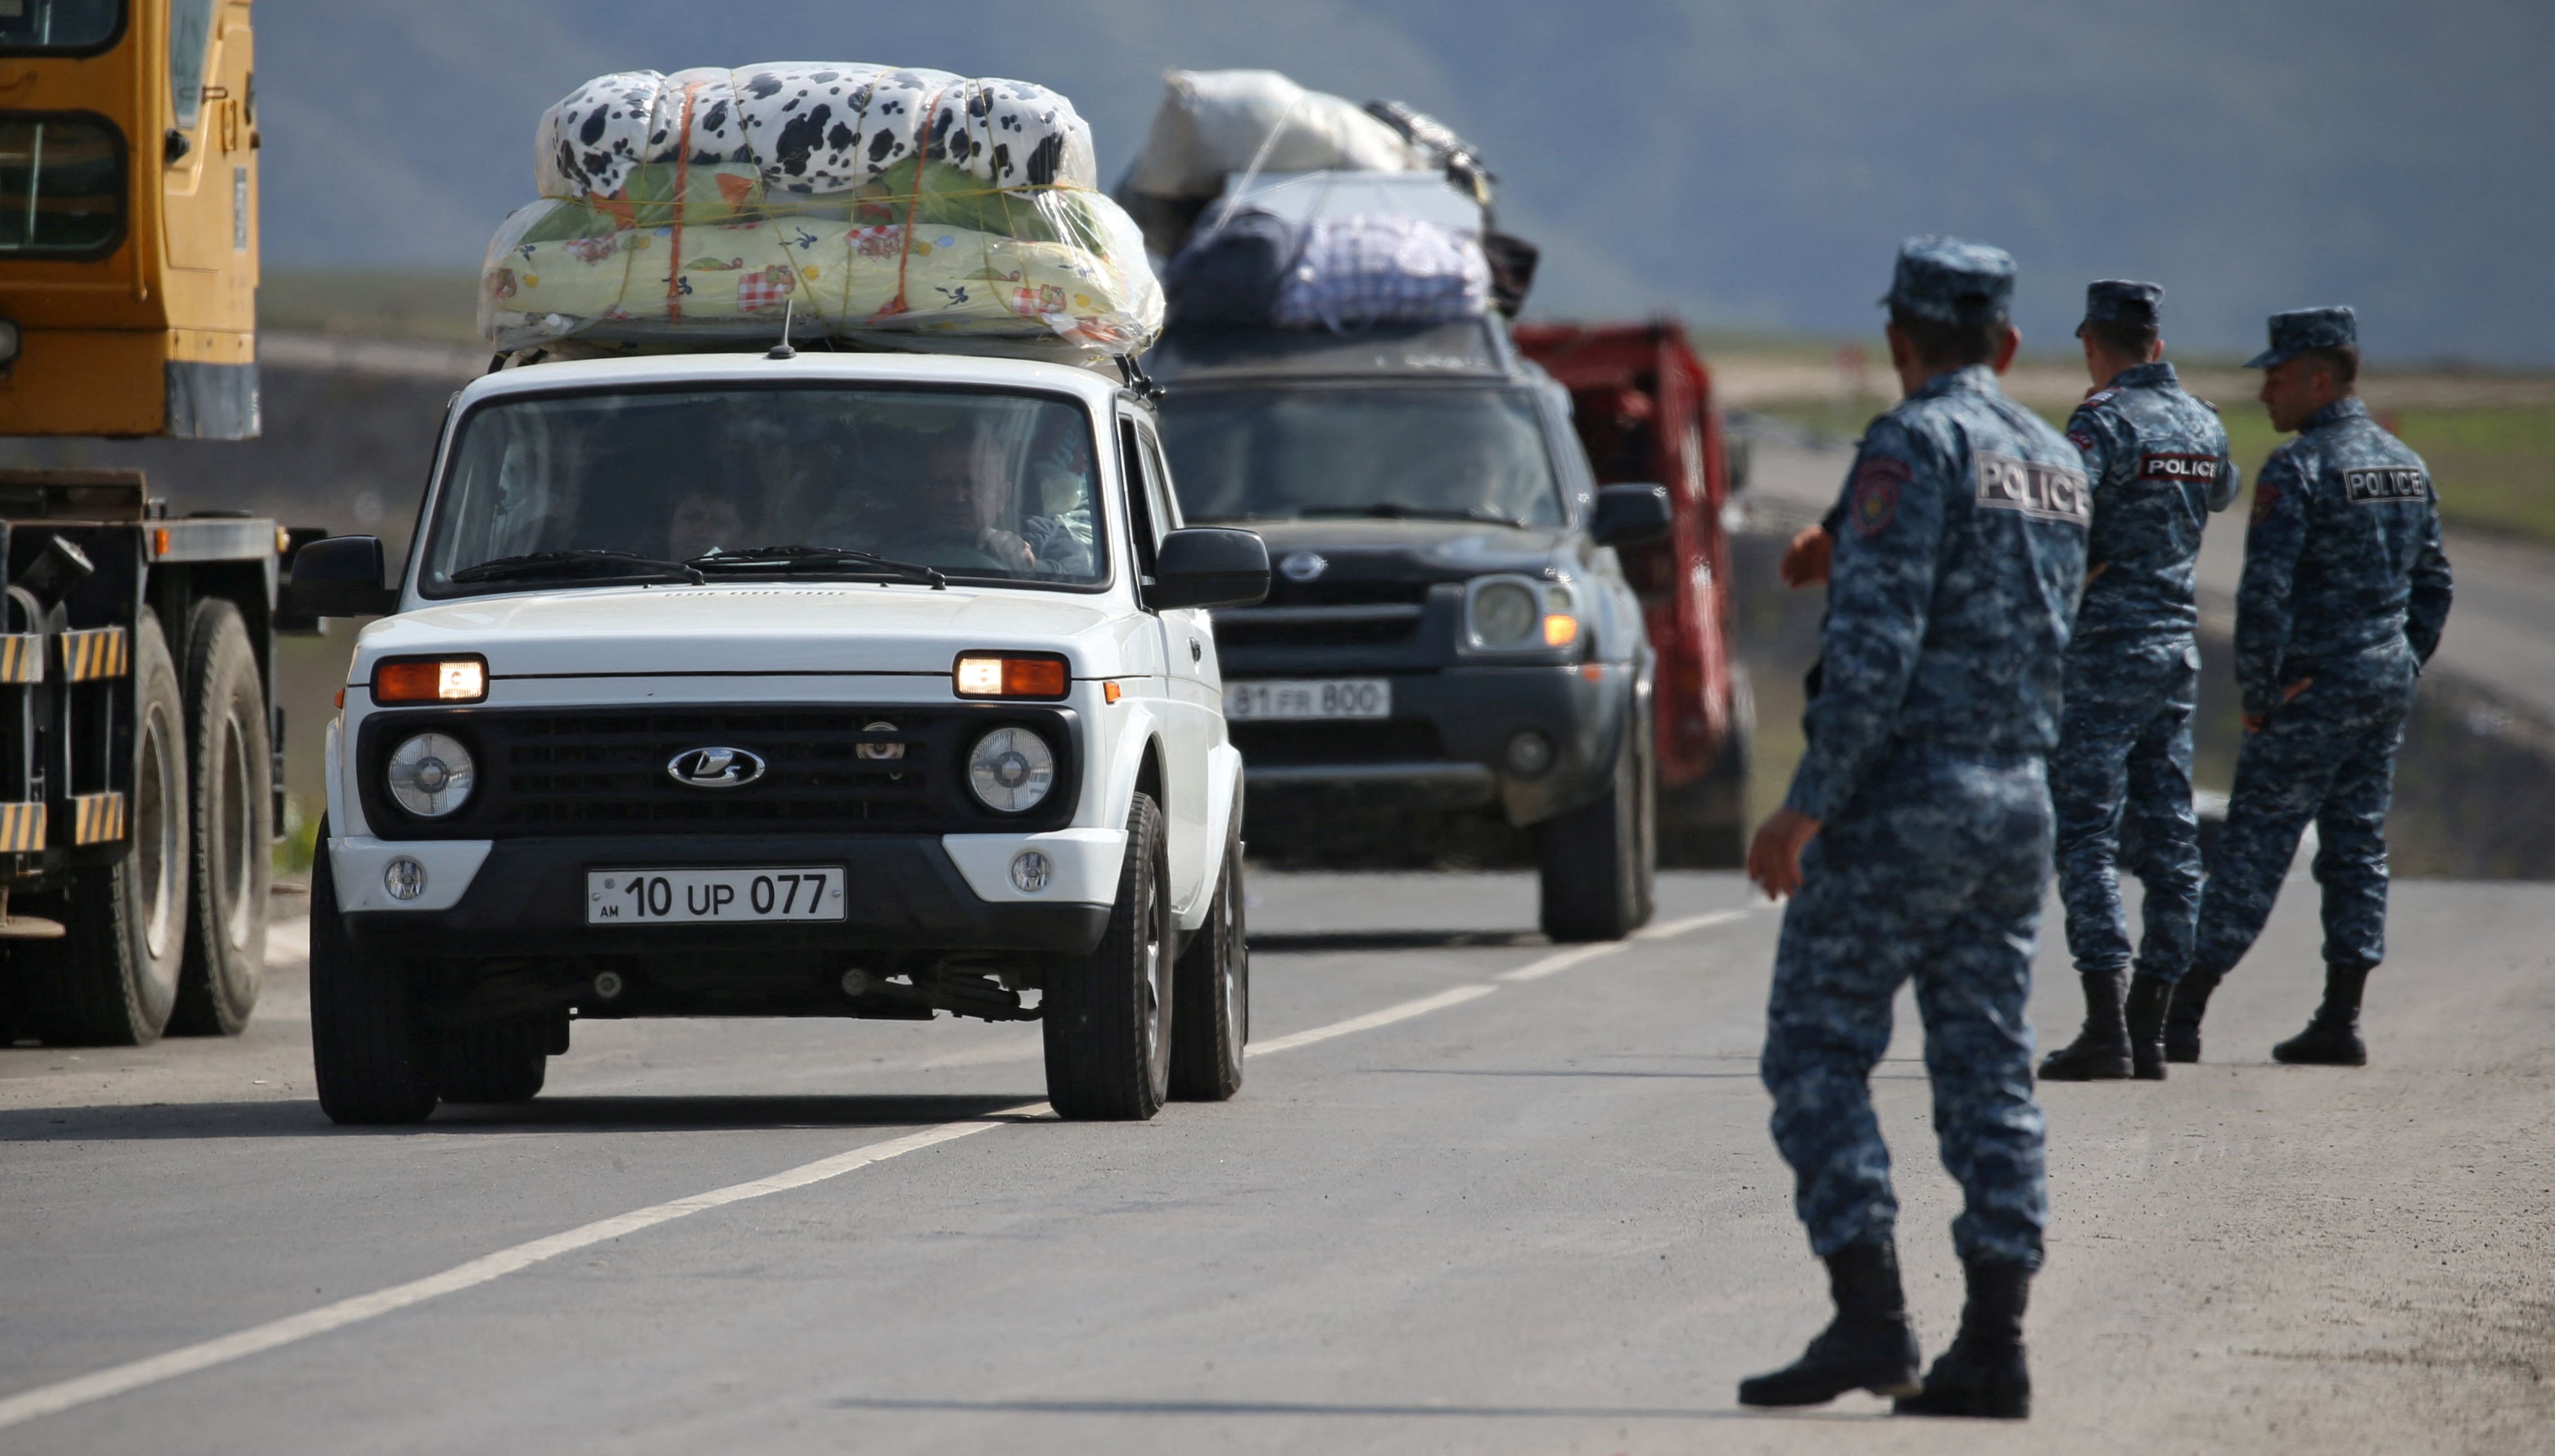 Armenia and Azerbaijan's new-old border war, Conflict News